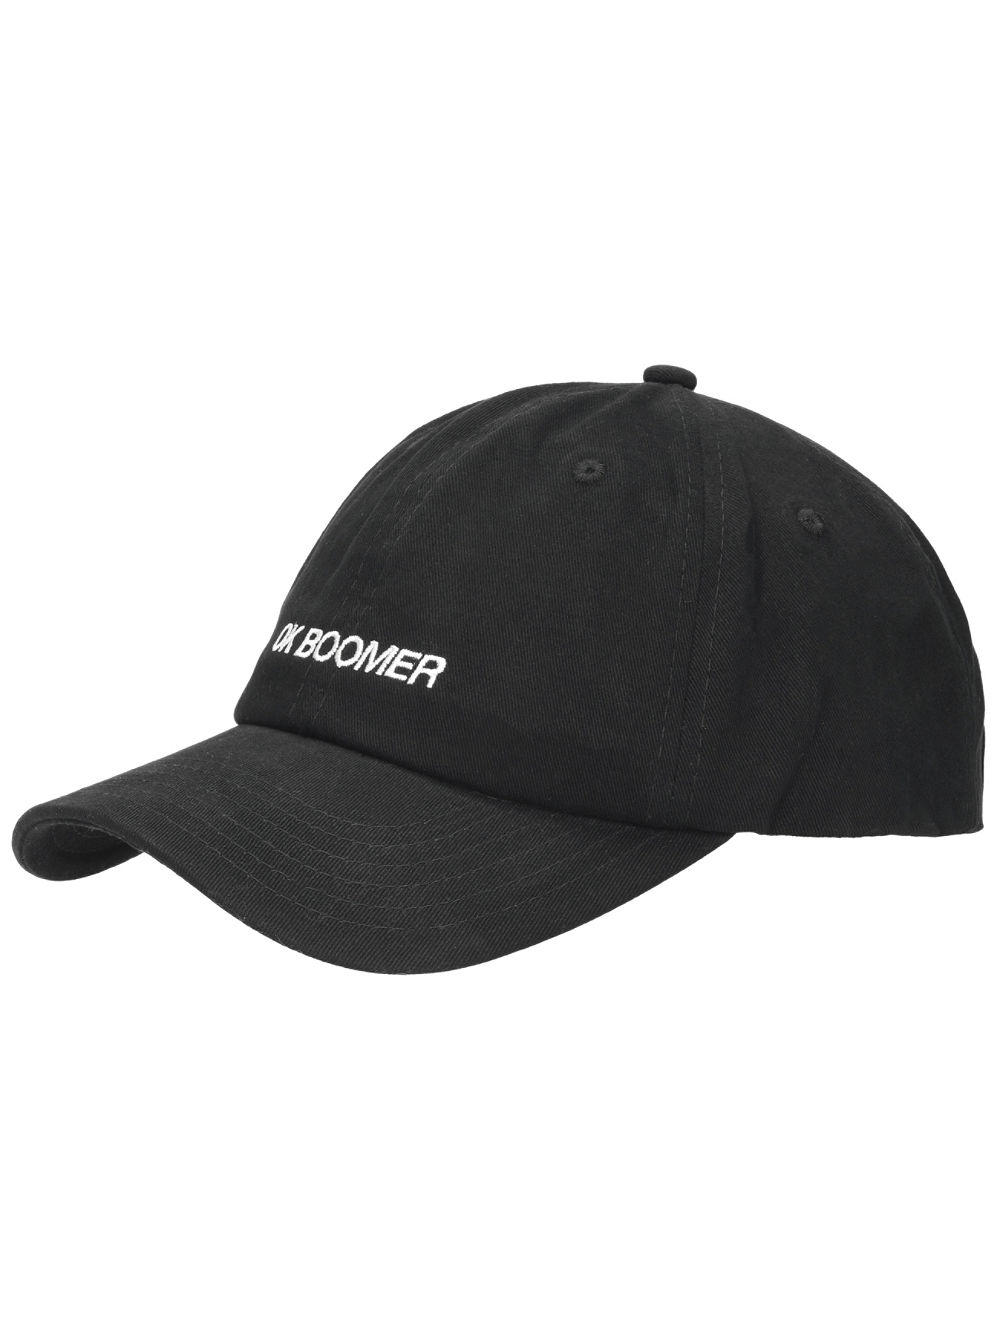 OK Boomer Caps